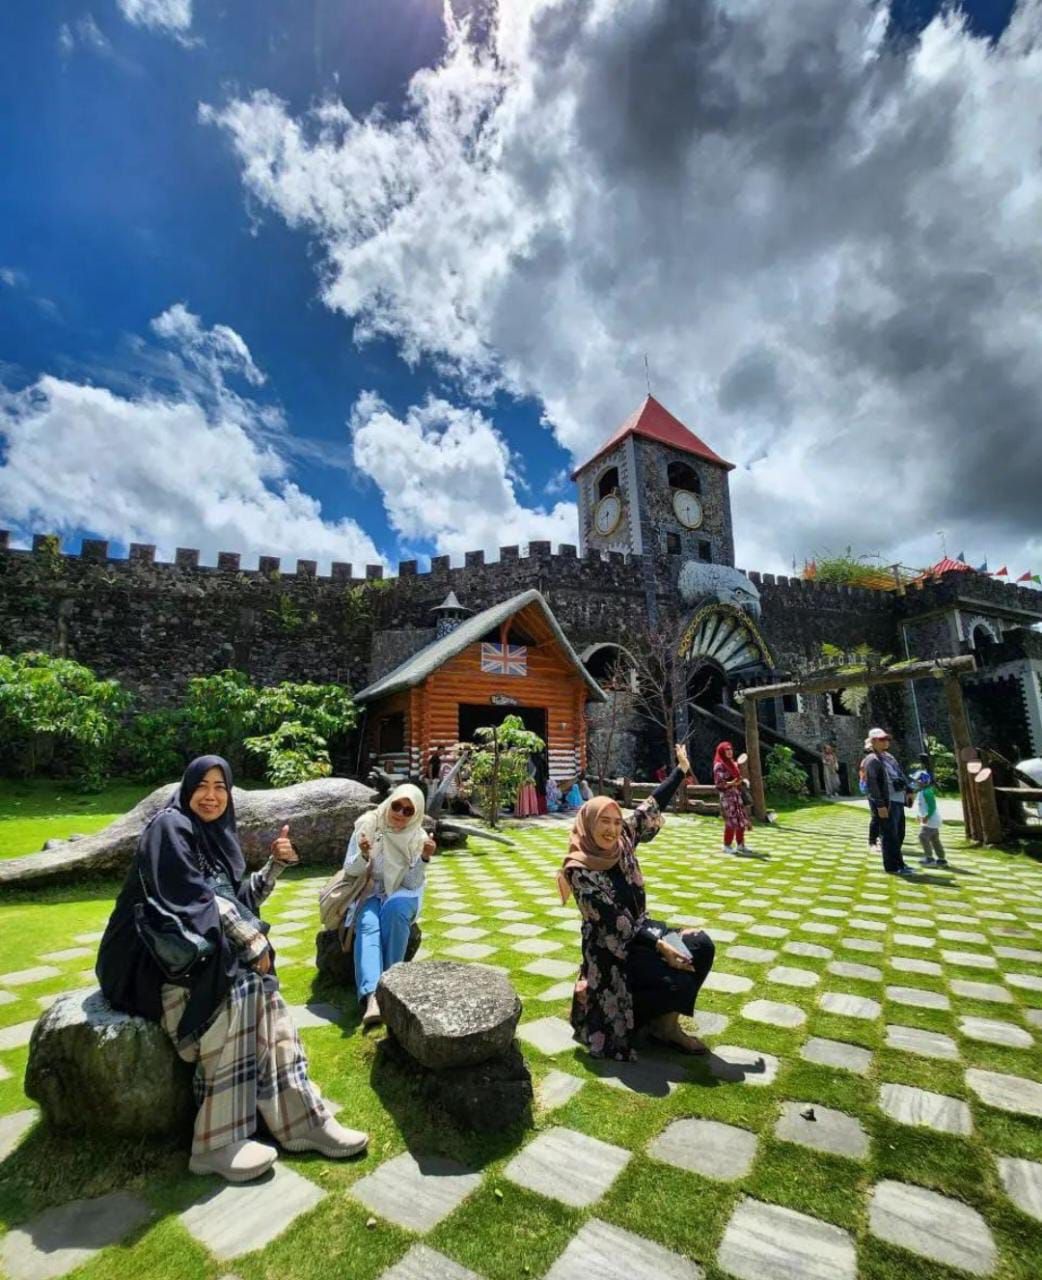 The Lost World Castle/IG/@travelmurahjogjakarta